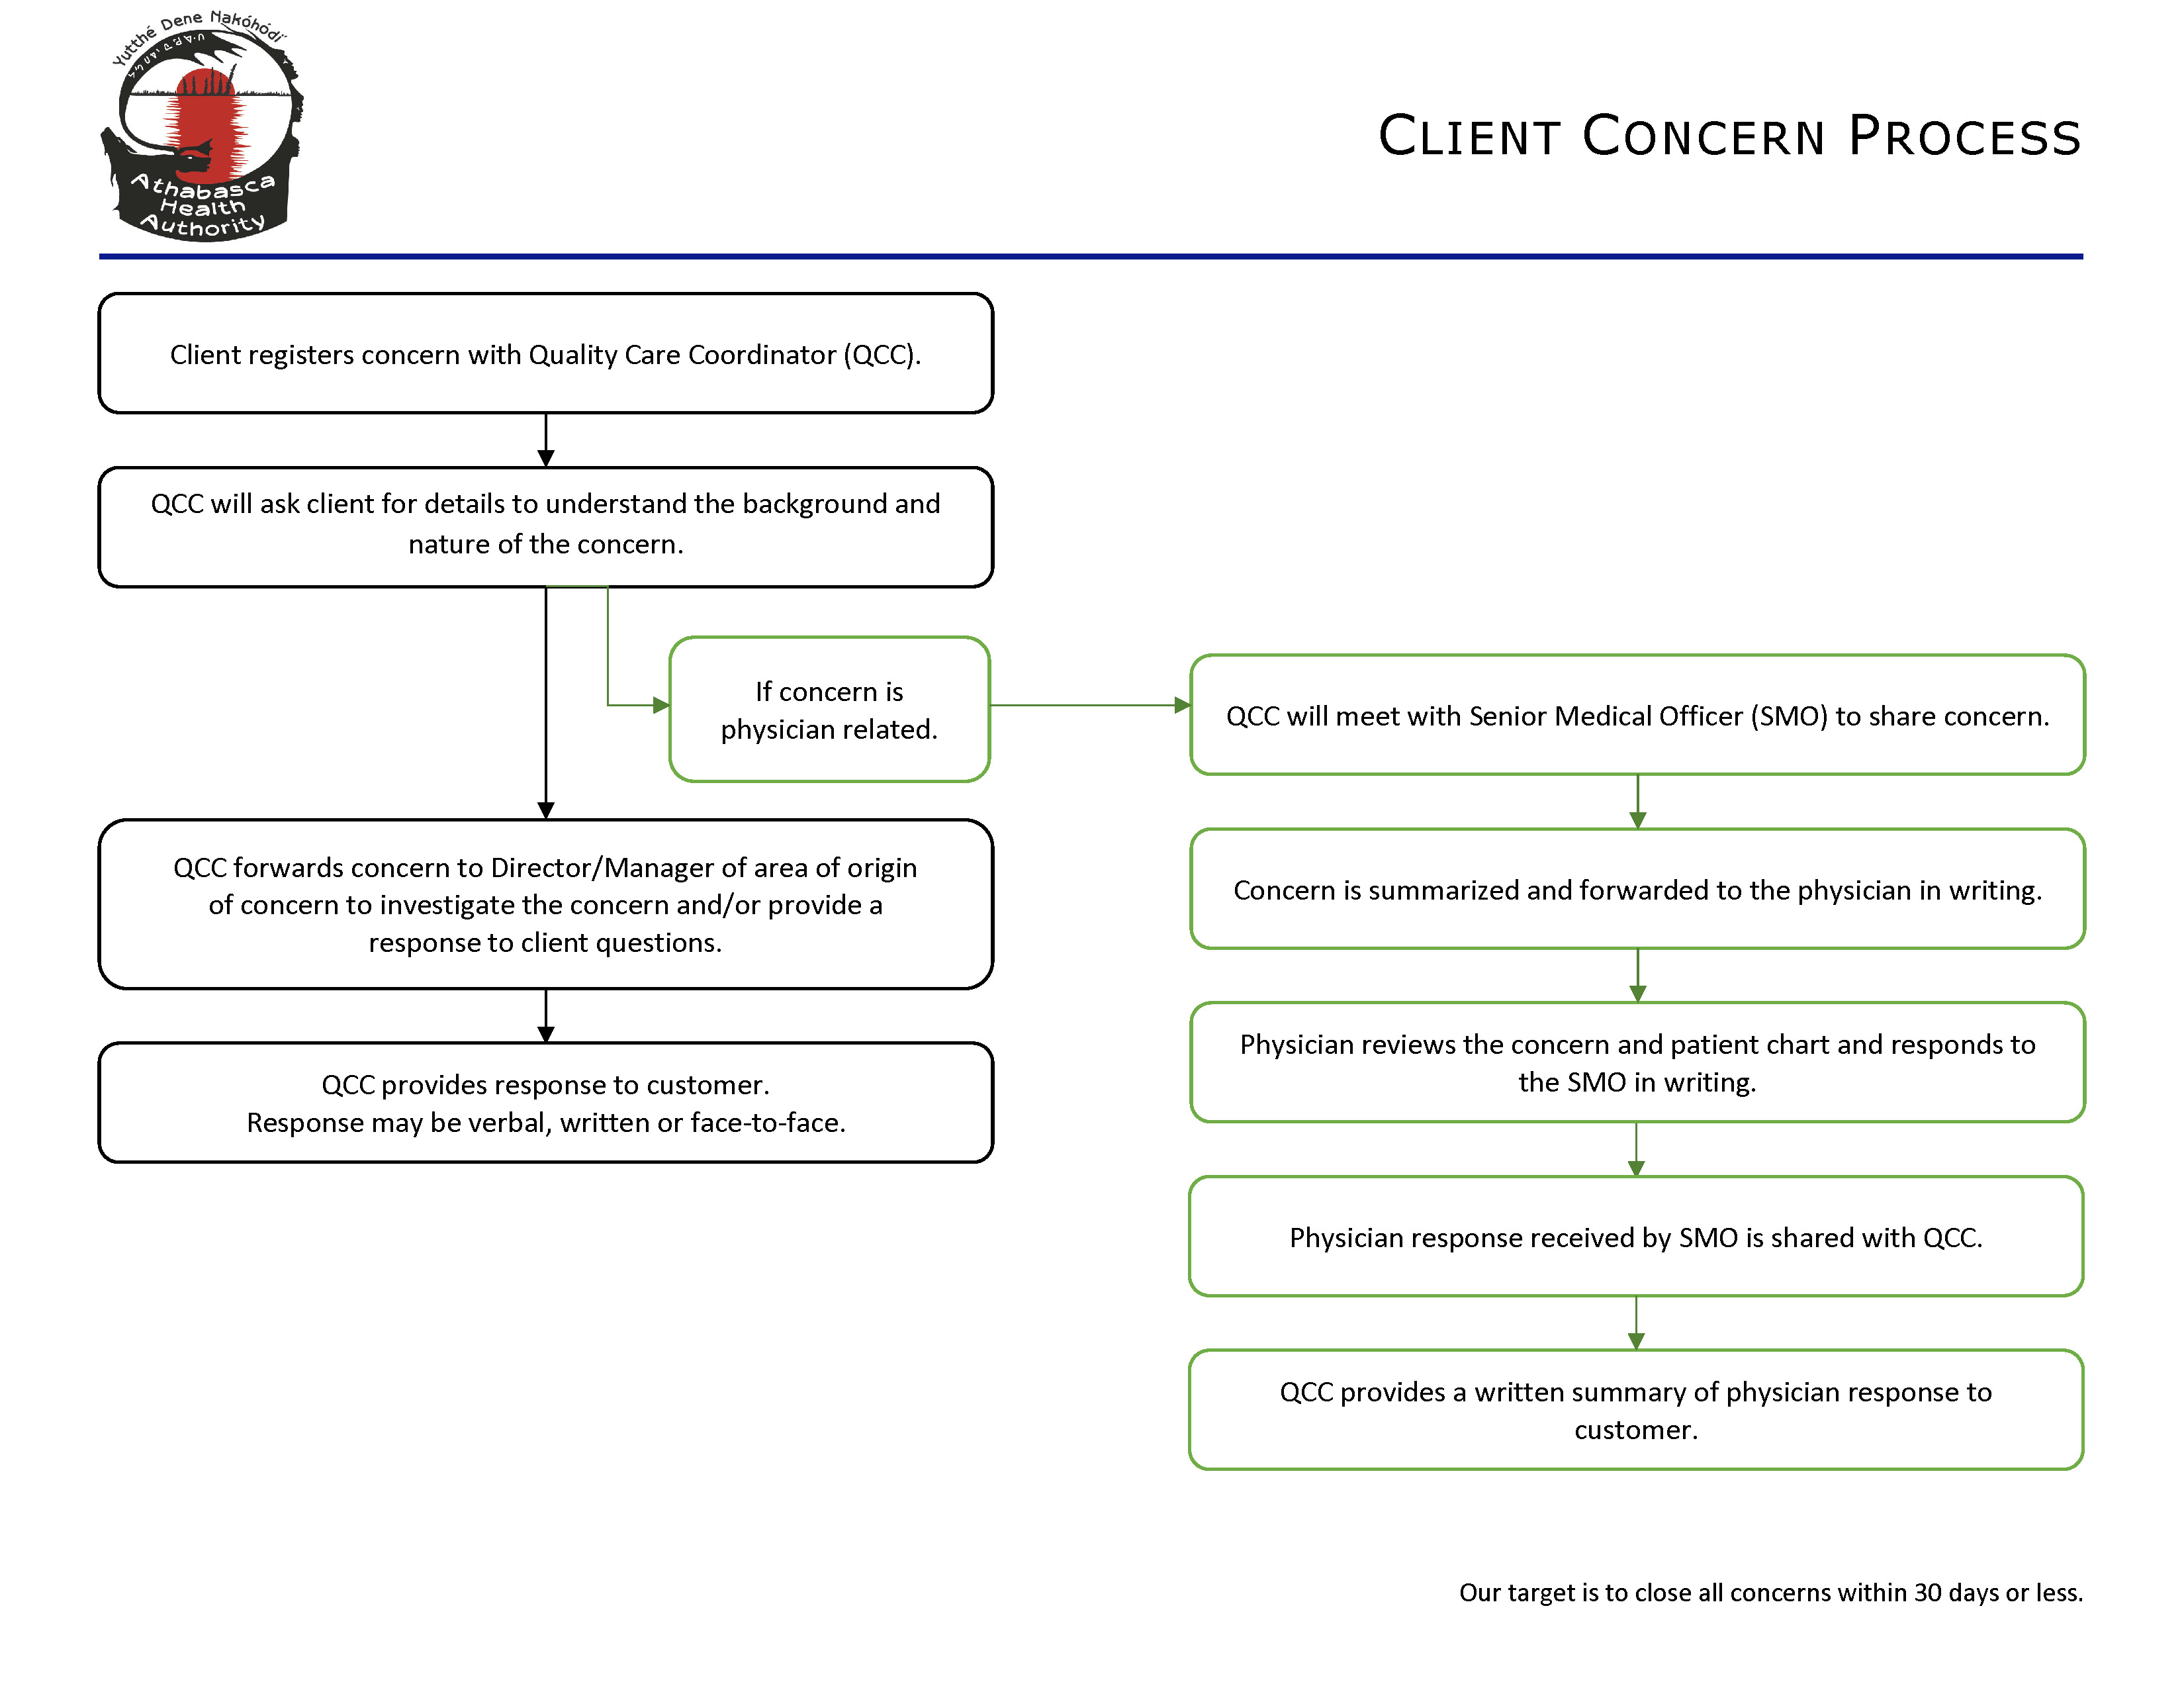 ClientConcernProcessAHA.jpg